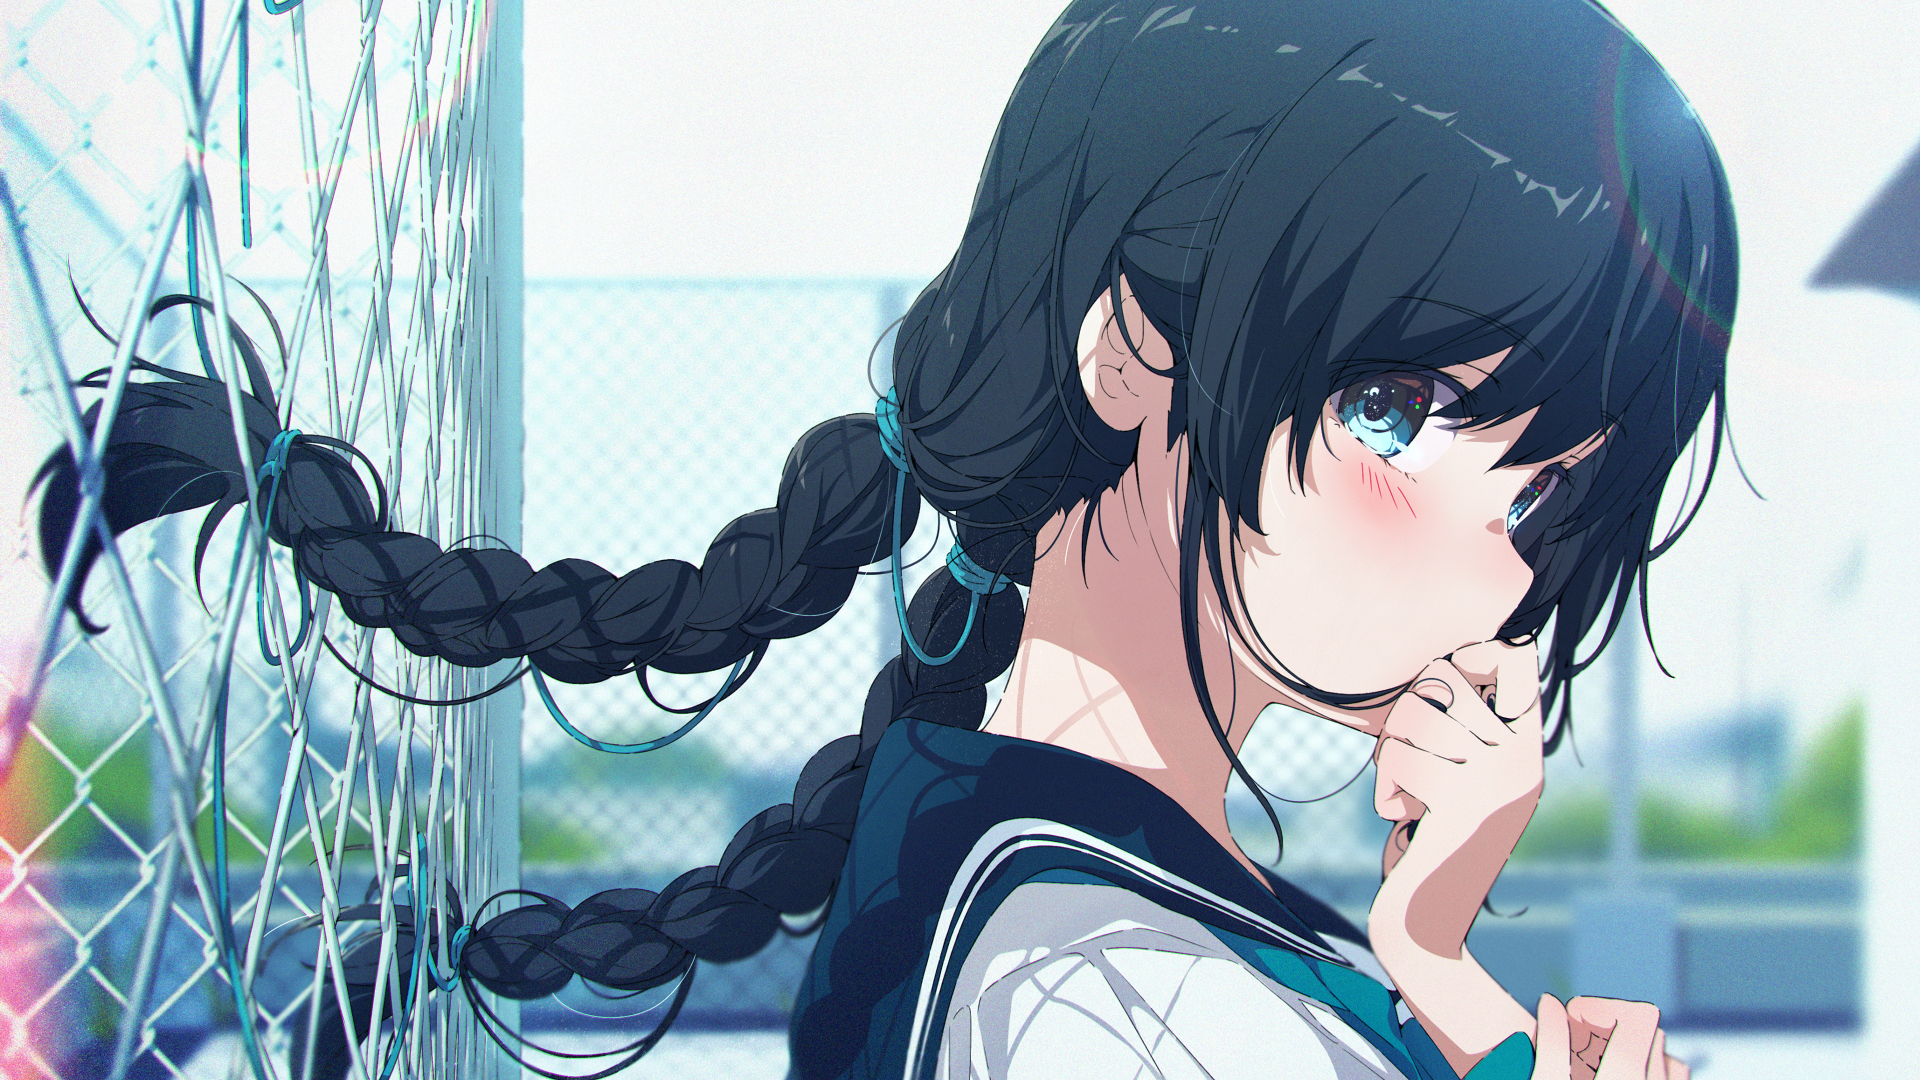 Anime Anime Girls Dark Hair Long Hair Sailor Uniform Metal Grid Pigtails Depth Of Field Blue Eyes Ri 1920x1080